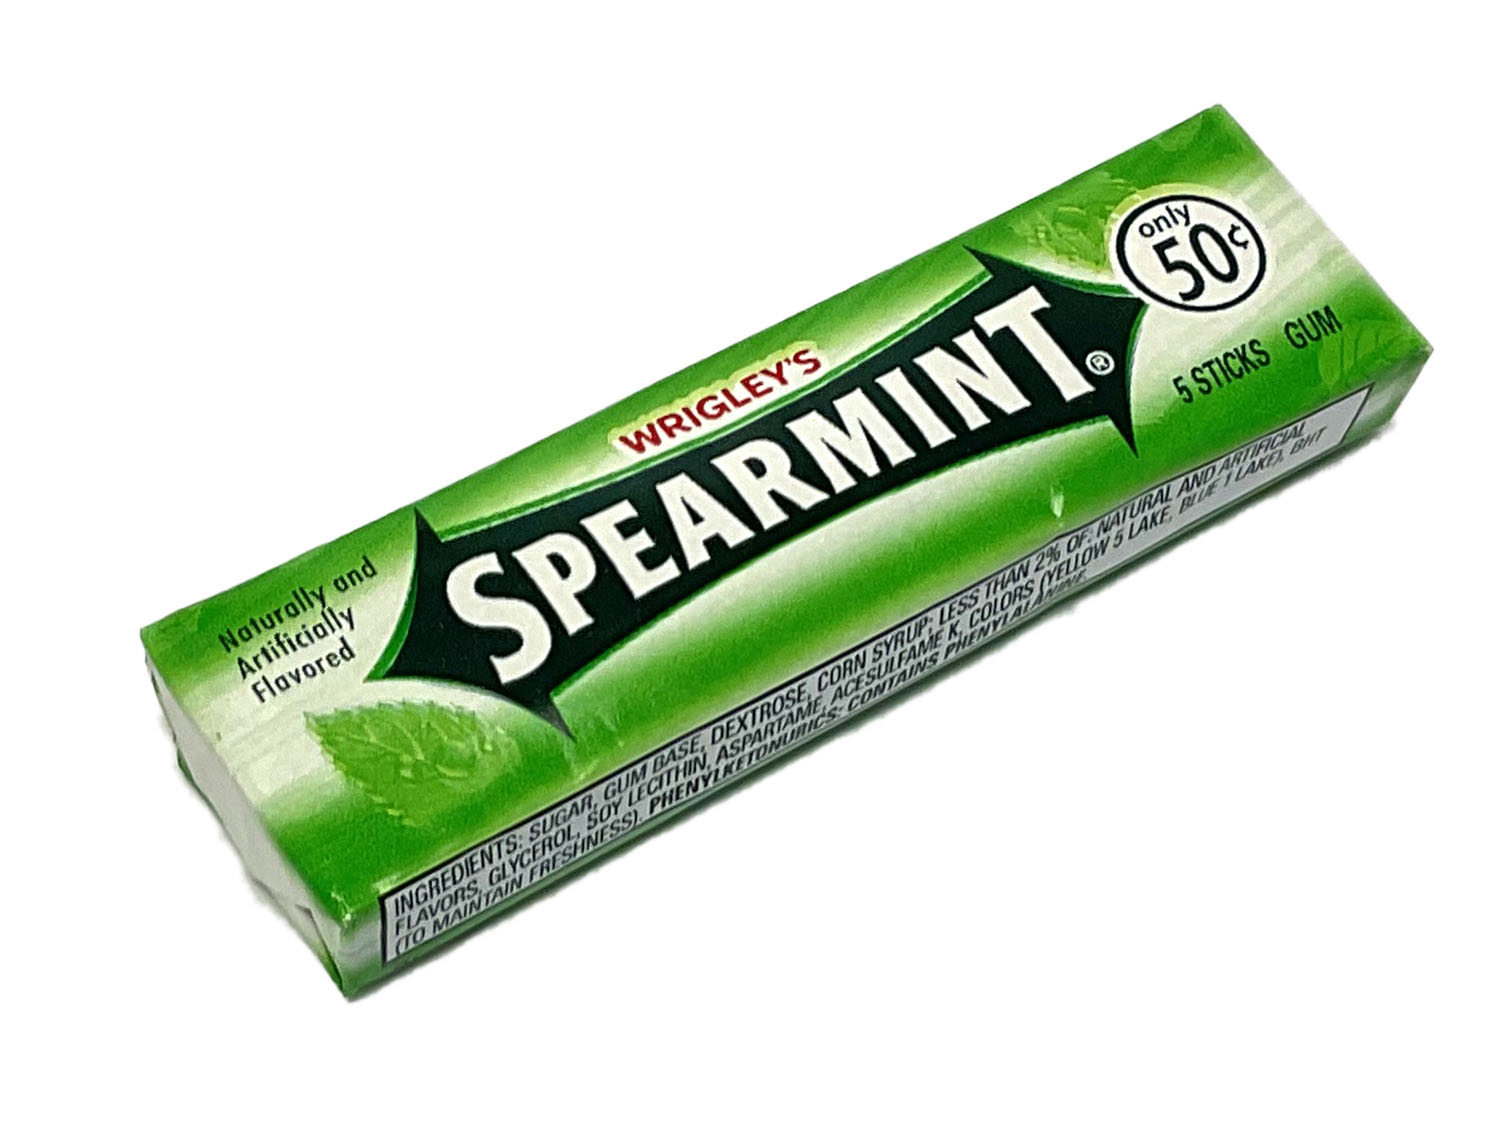 Spearmint Gum - 5-stick pack